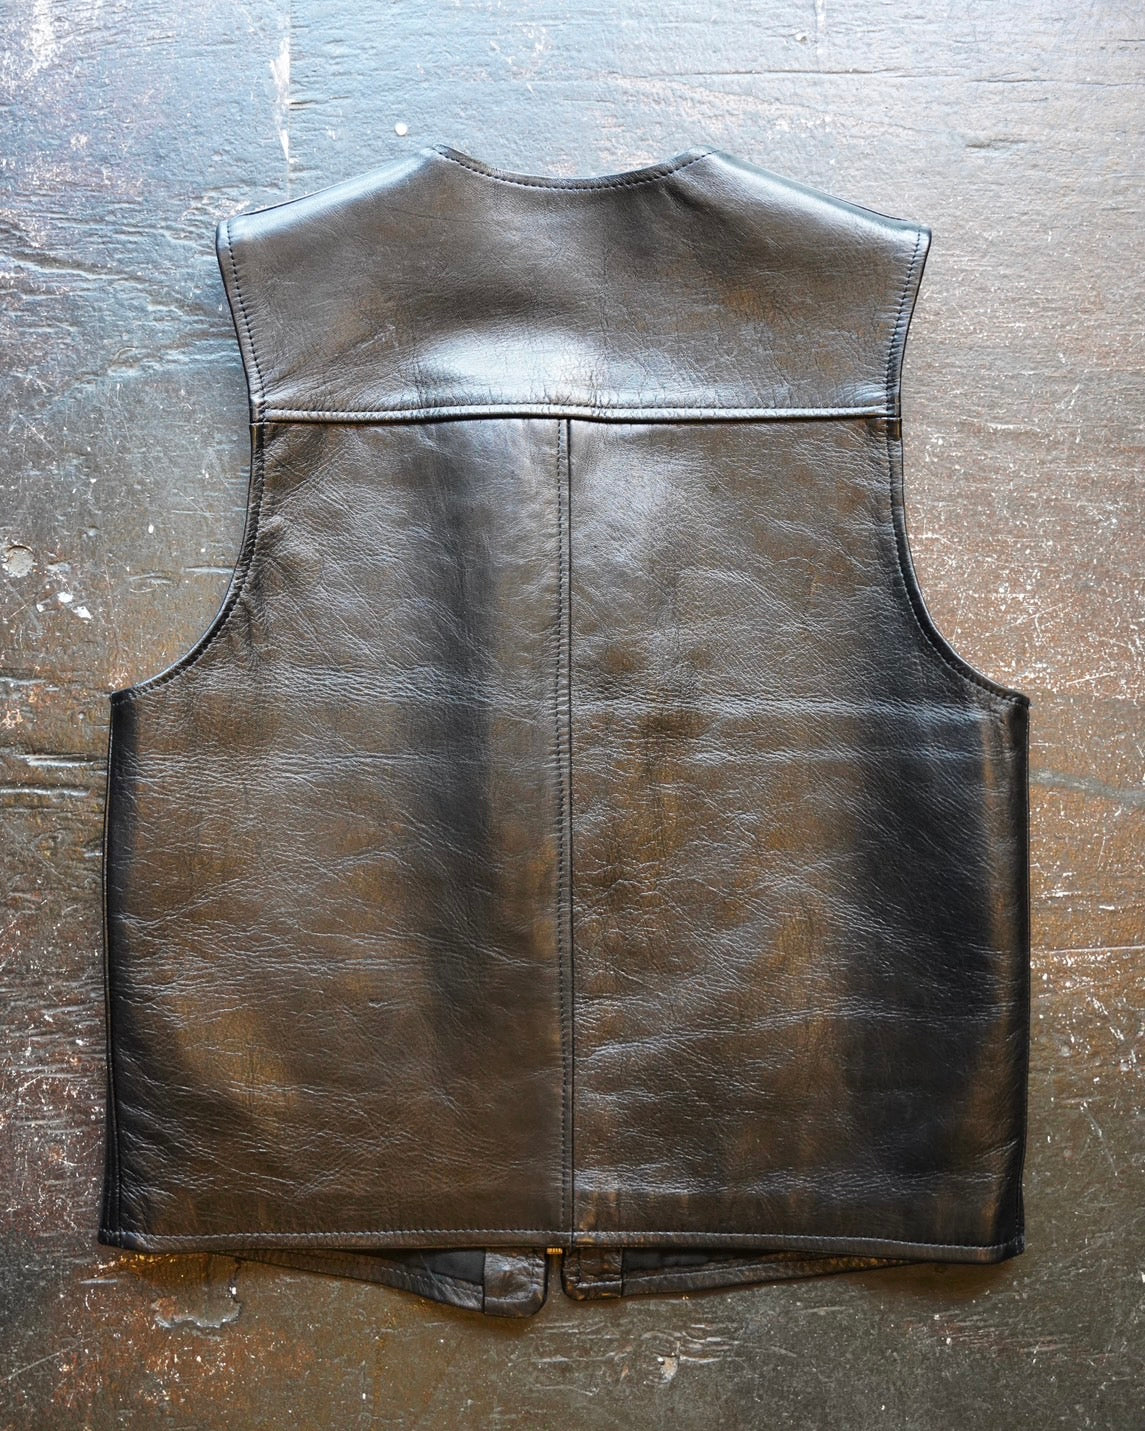 #401 1950s Leather Vest